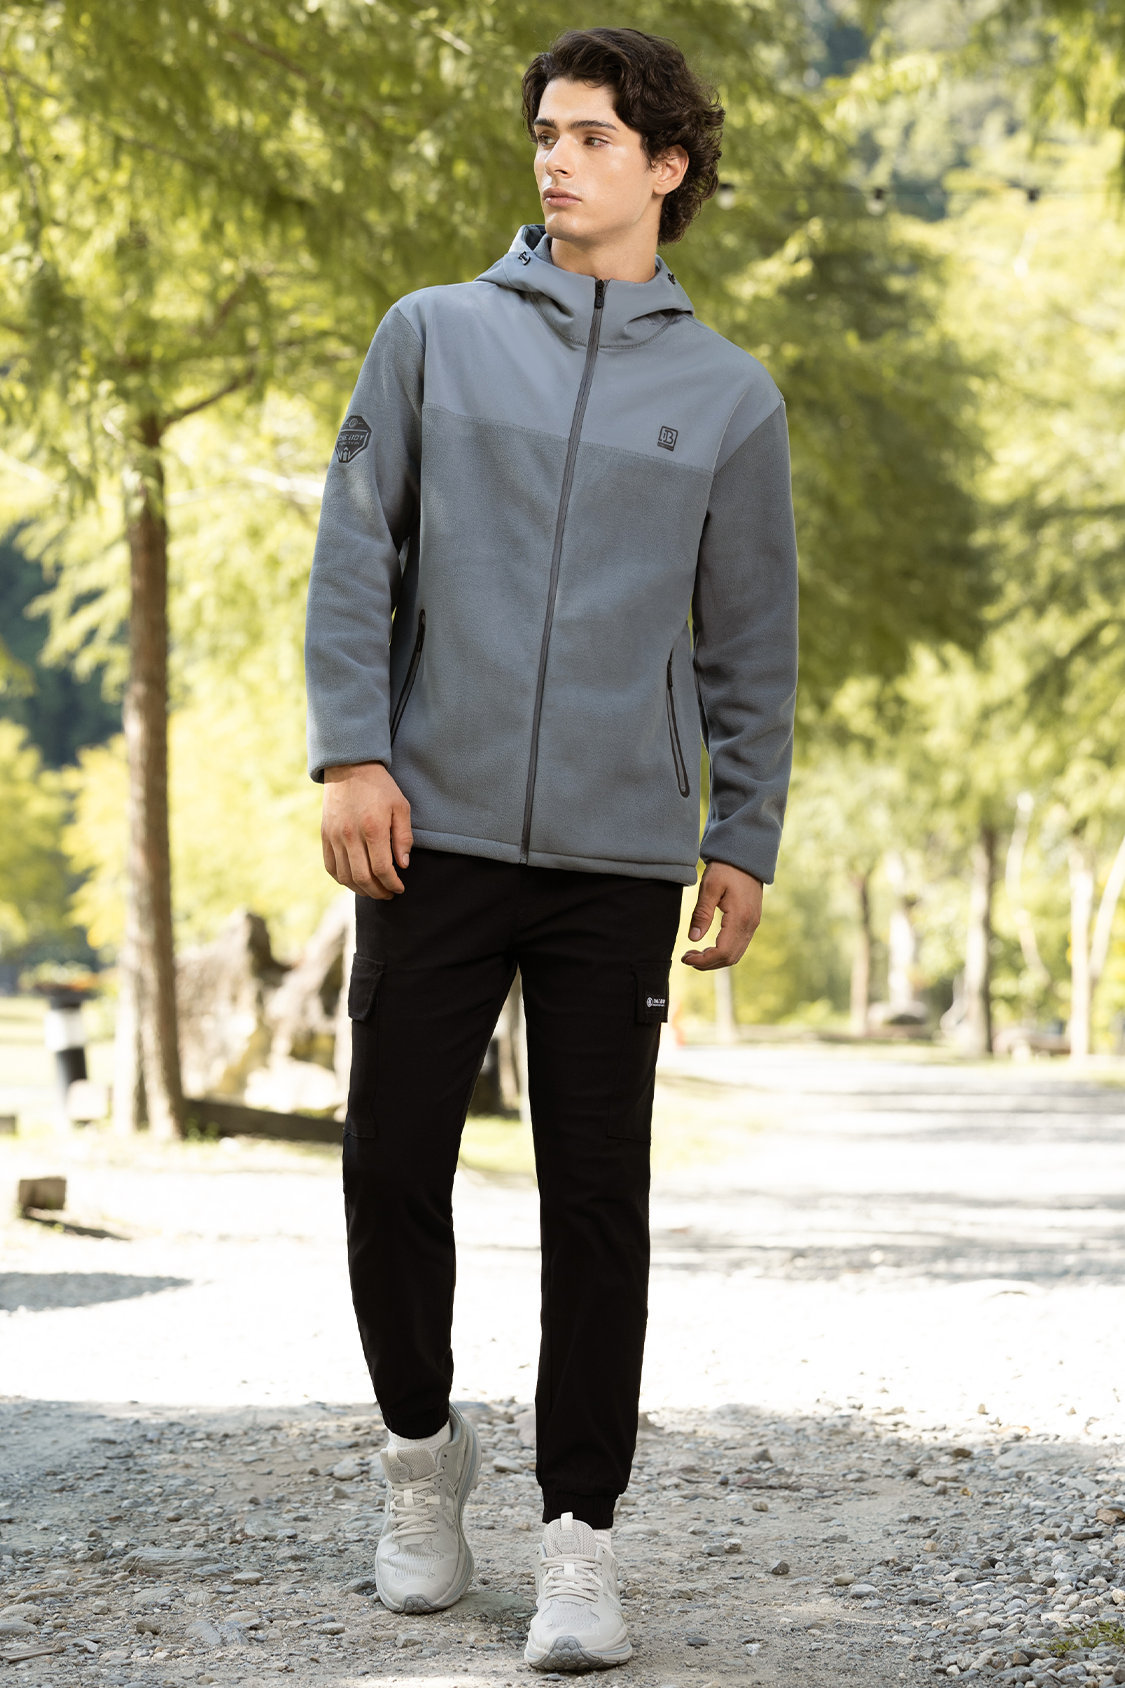 Lightfleece Warmguard Windresist Interchange Jacket For Men